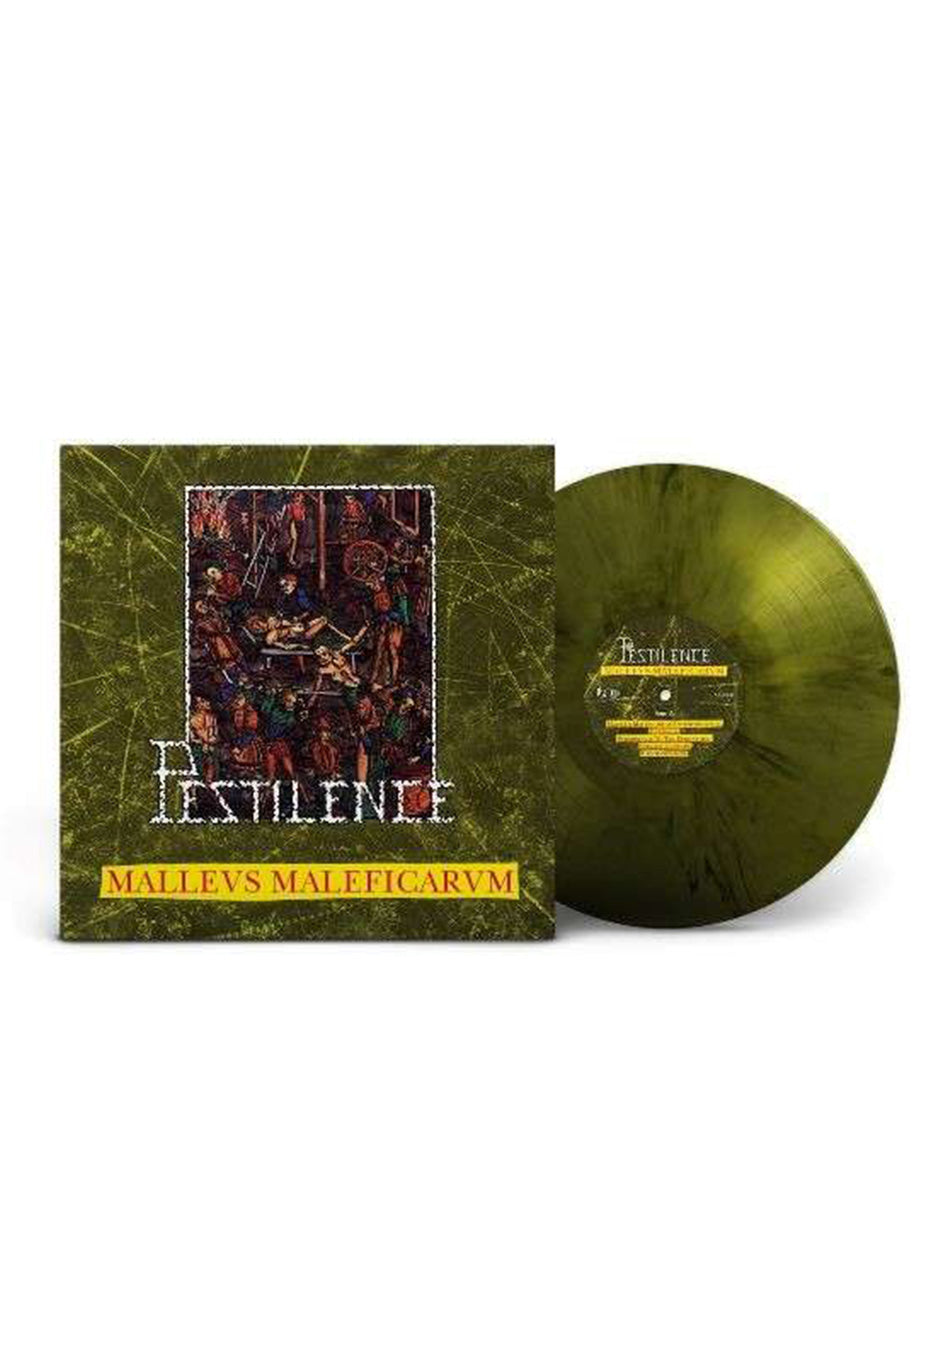 Pestilence - Malleus Maleficarum (Remastered) Ltd. Green - Marbled Vinyl